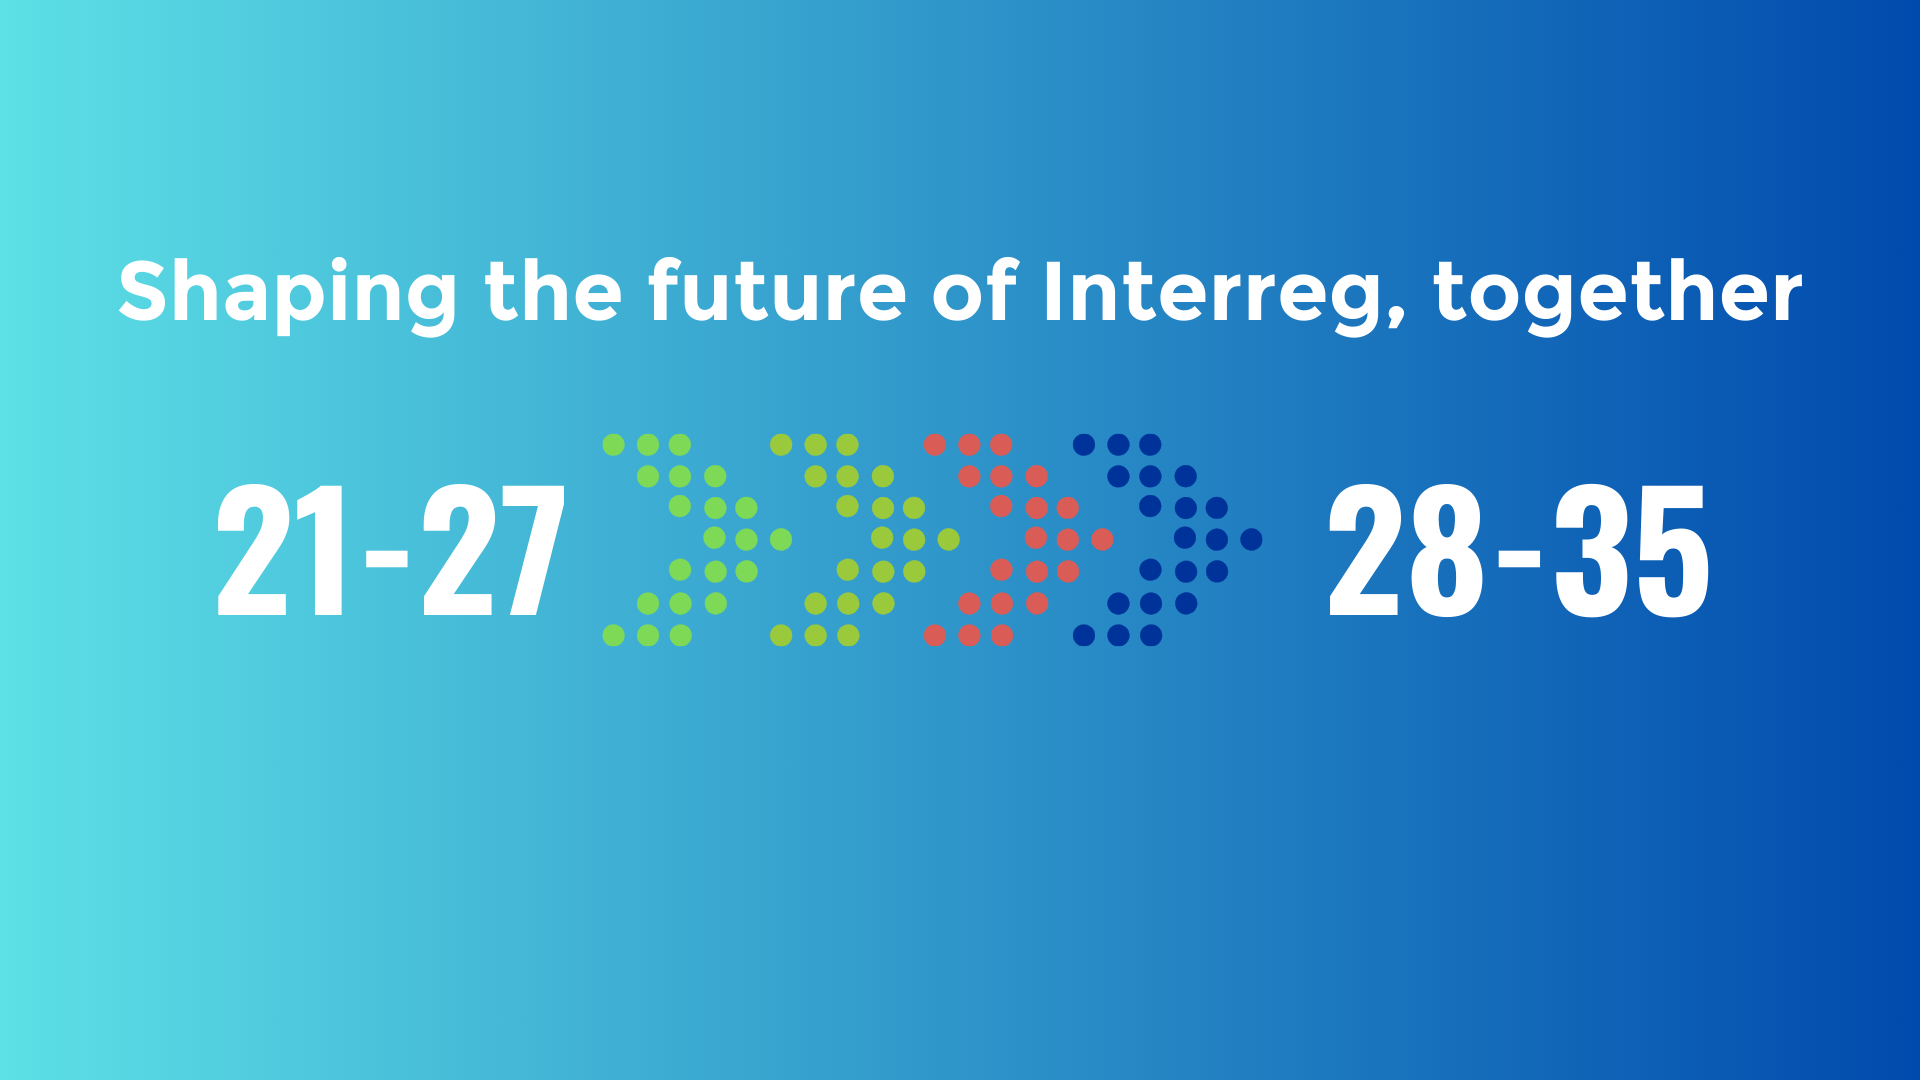 Help us shape the future of Interreg!